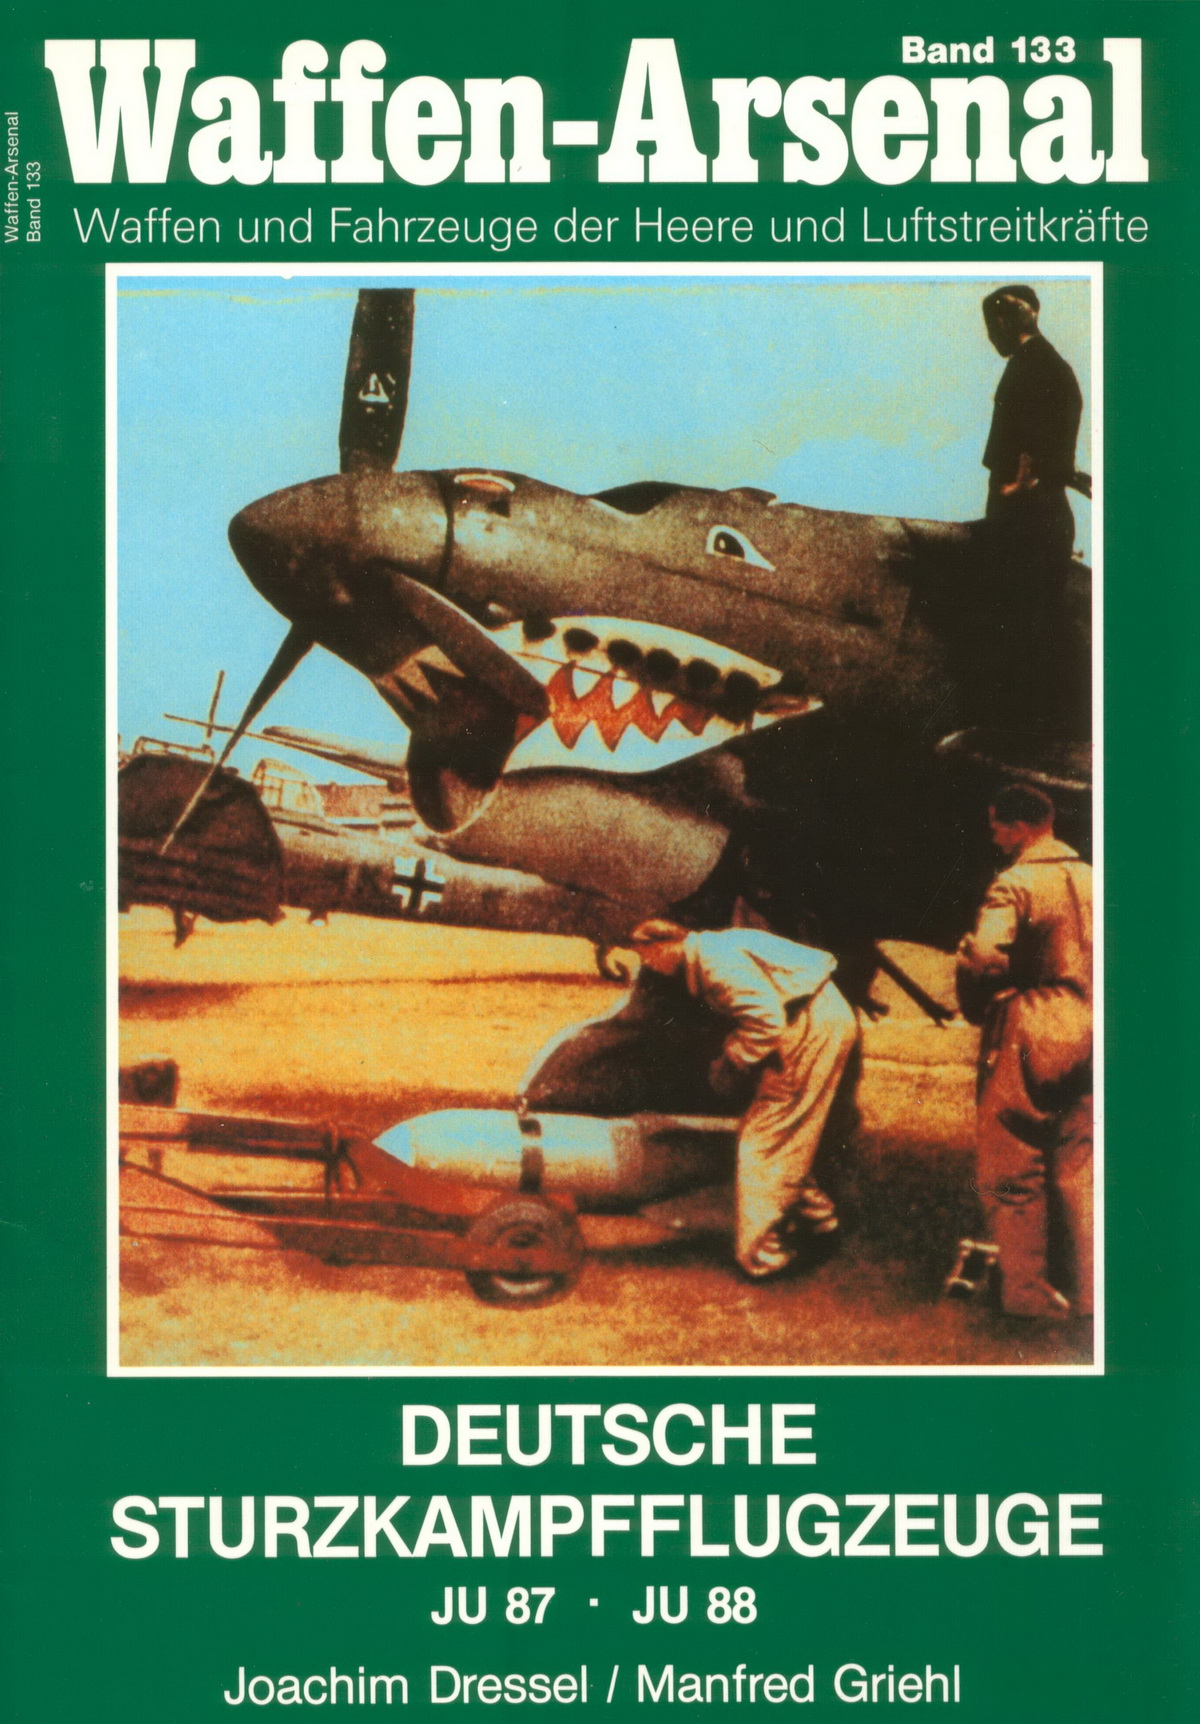 REF Waffen Arsenal SturzeKampflugzeug Band 133 Joachim Dressel Manfred Griehl 0A